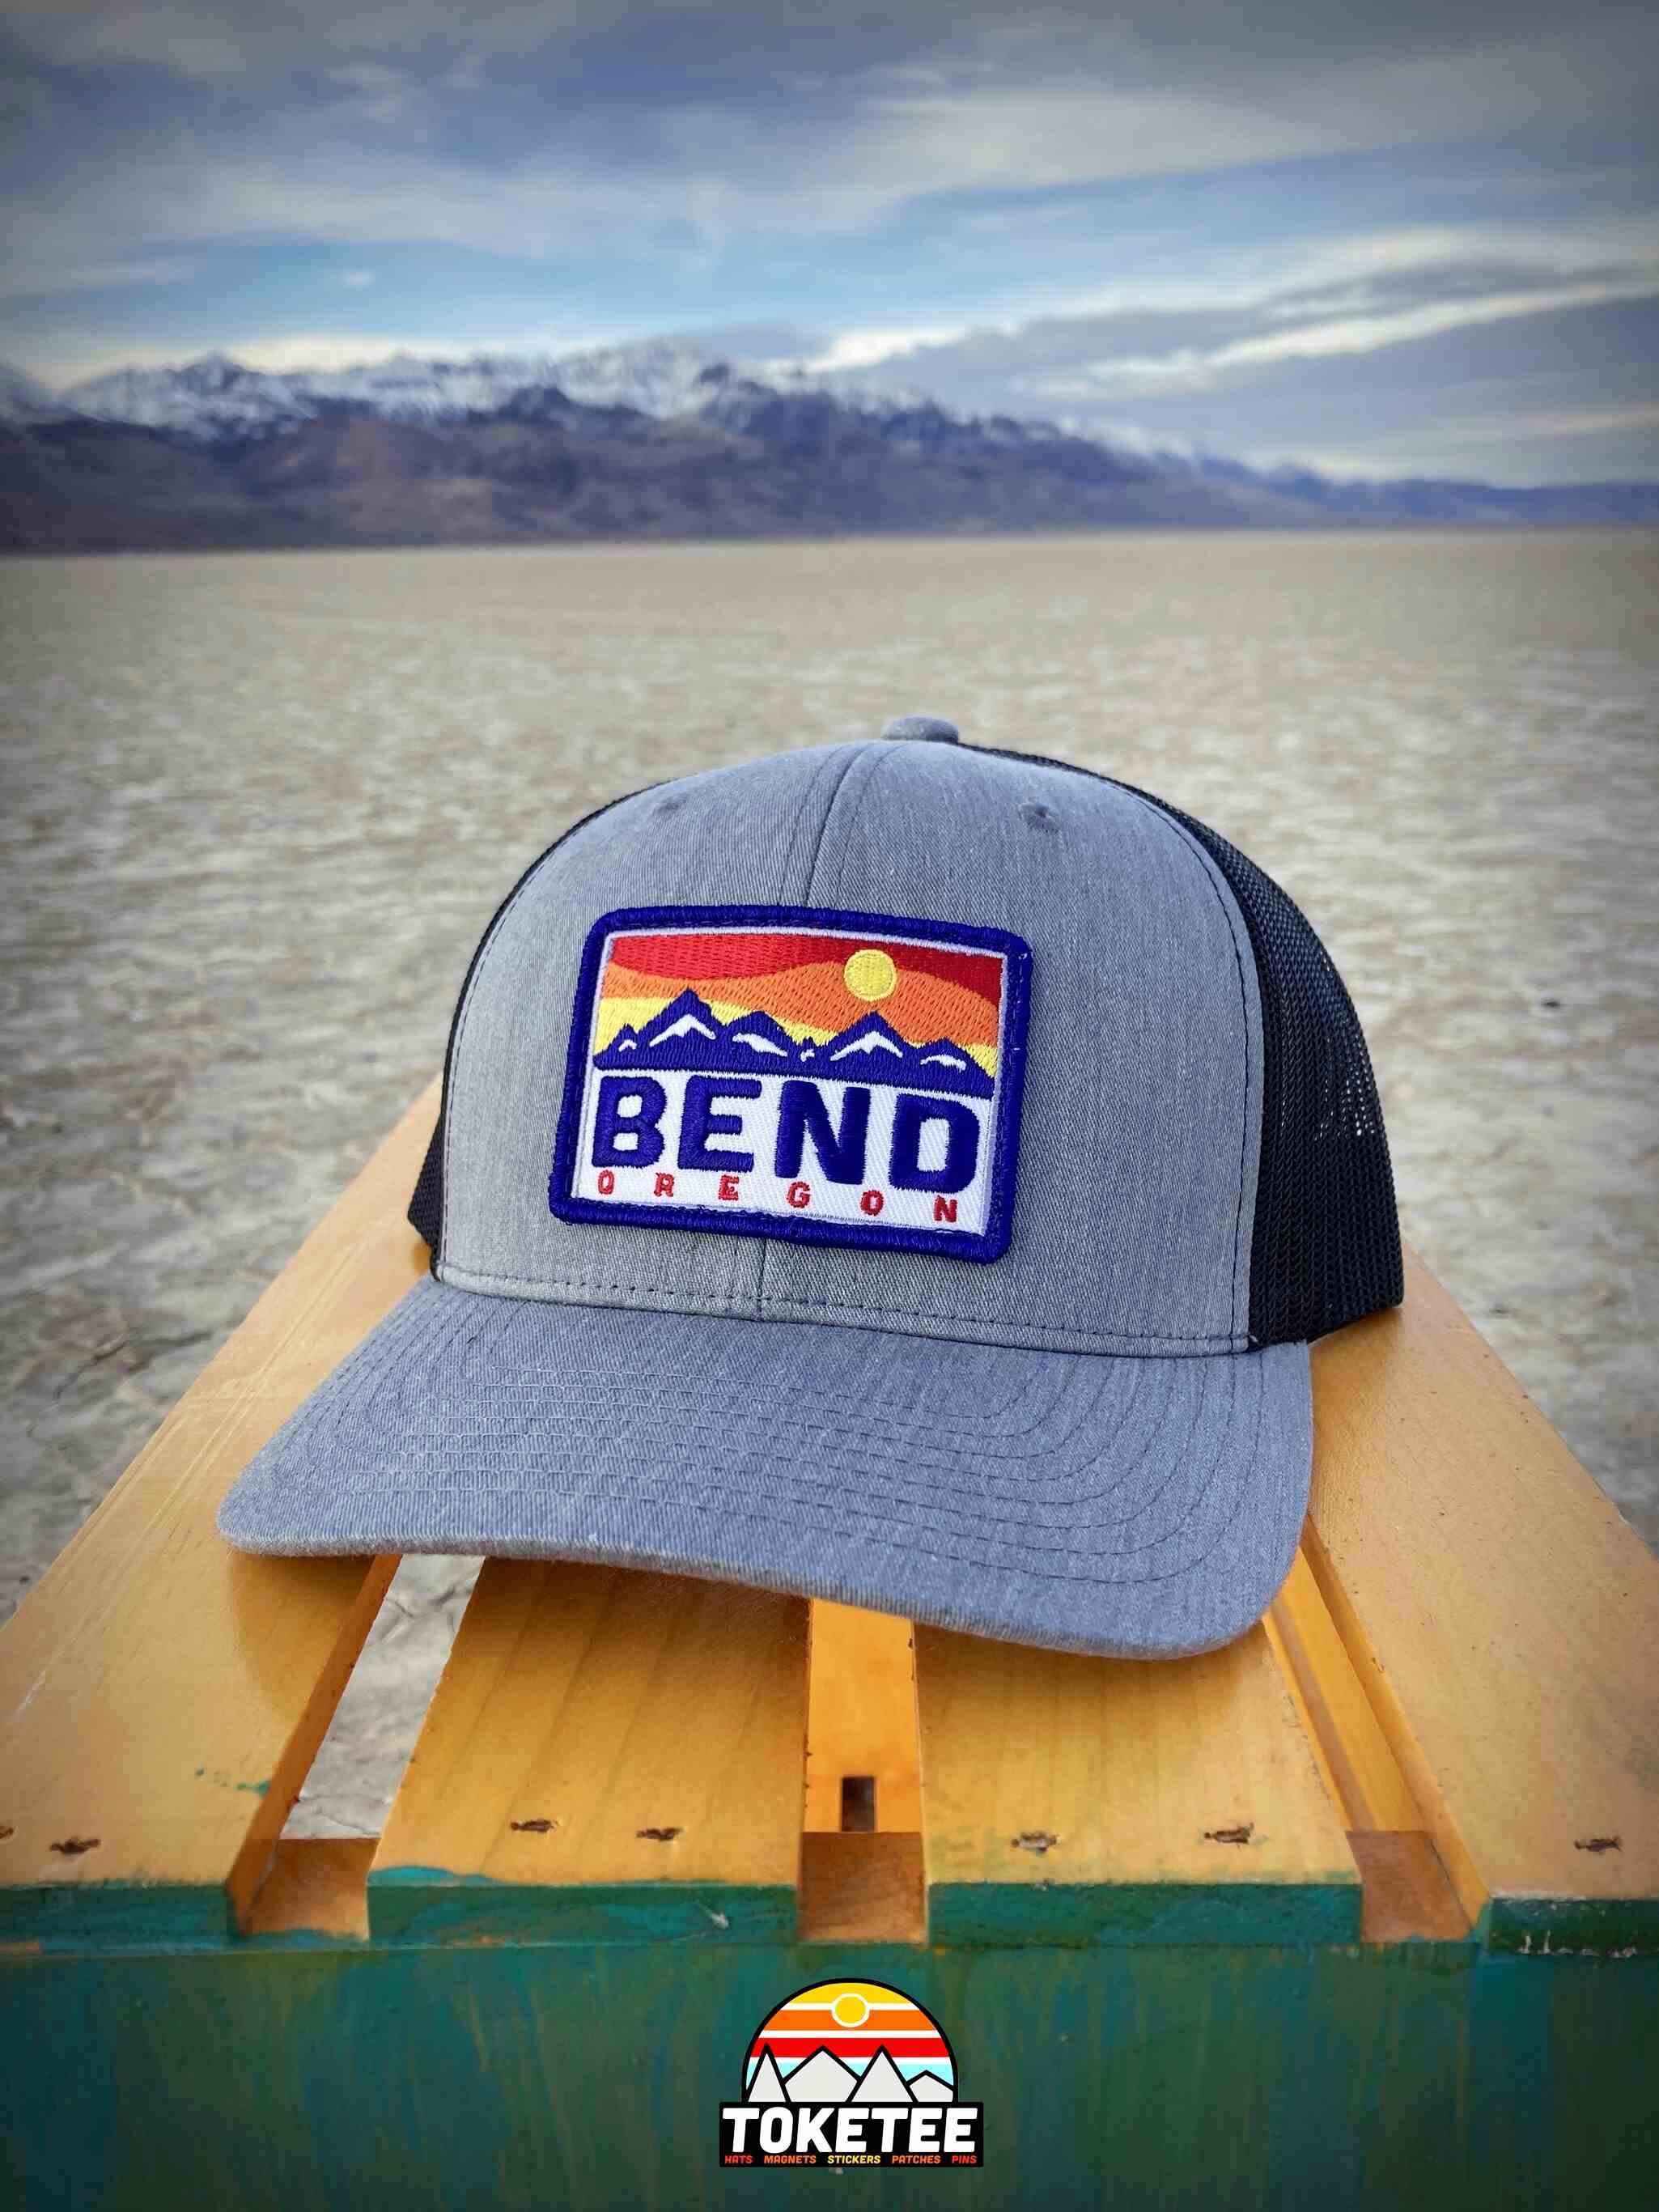 Unisex Adult Casual Casual Cap Sun Hats Oregon-Bend-Symbol 